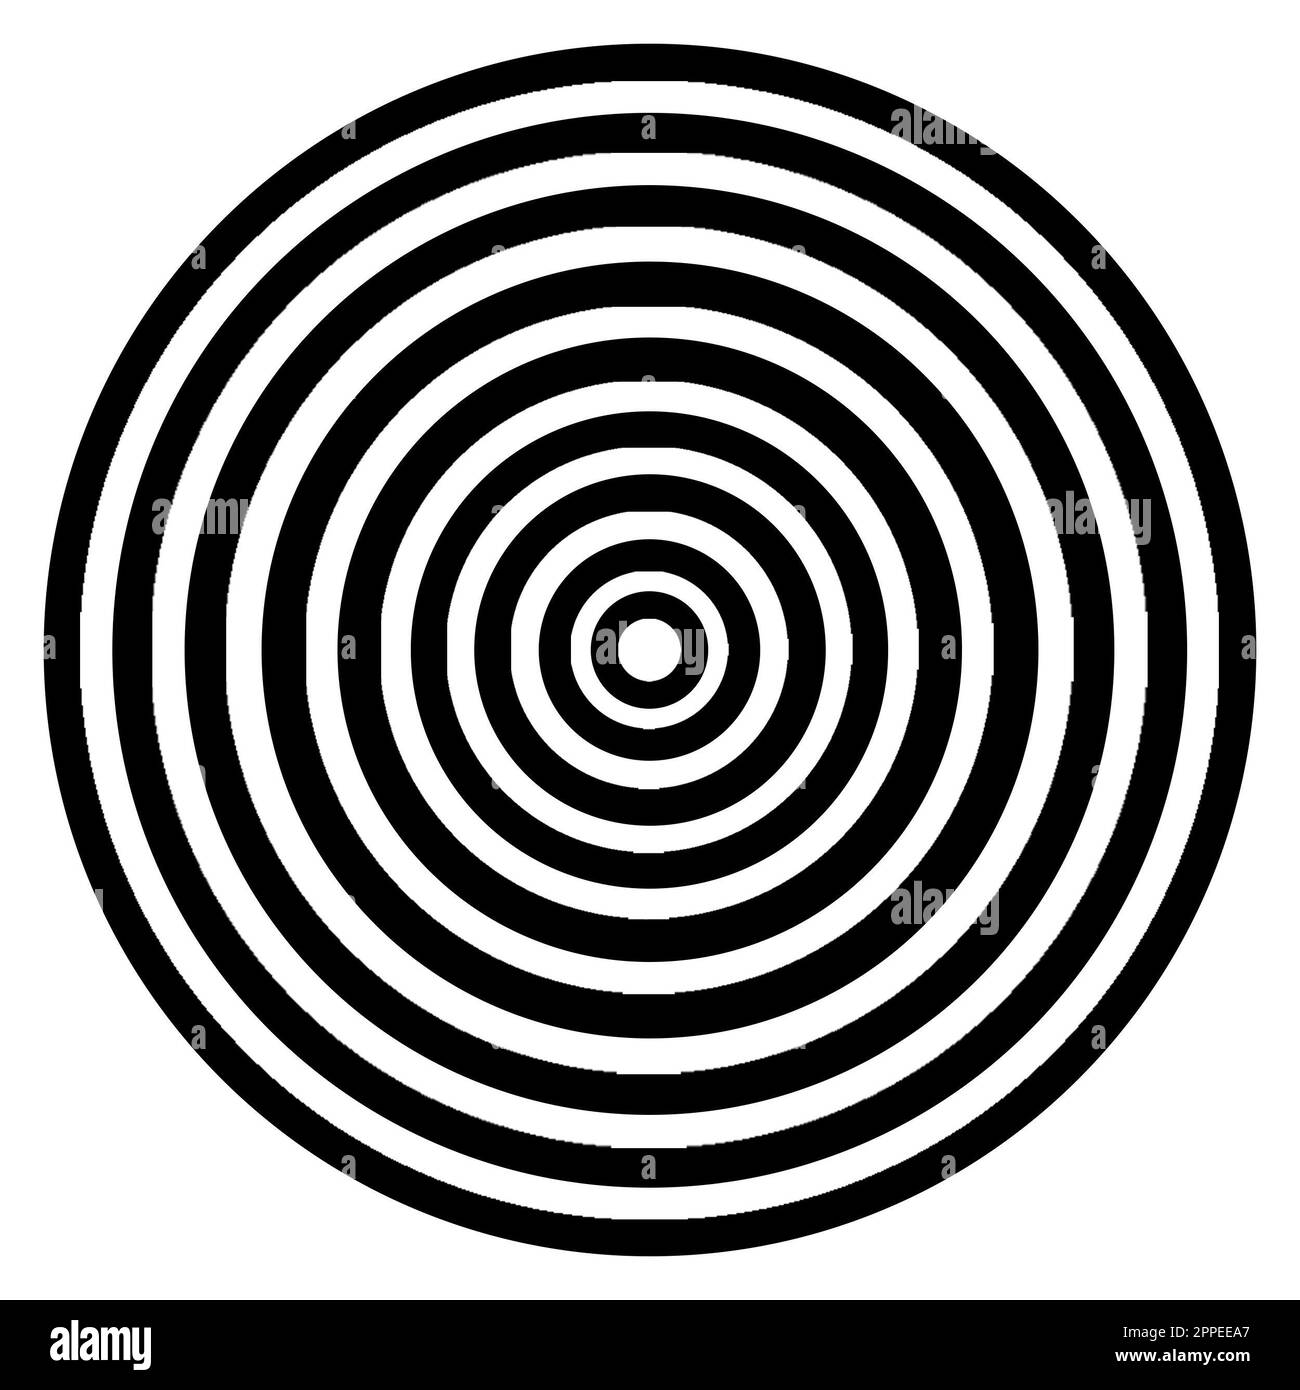 Hallucination black and white circles Stock Photo